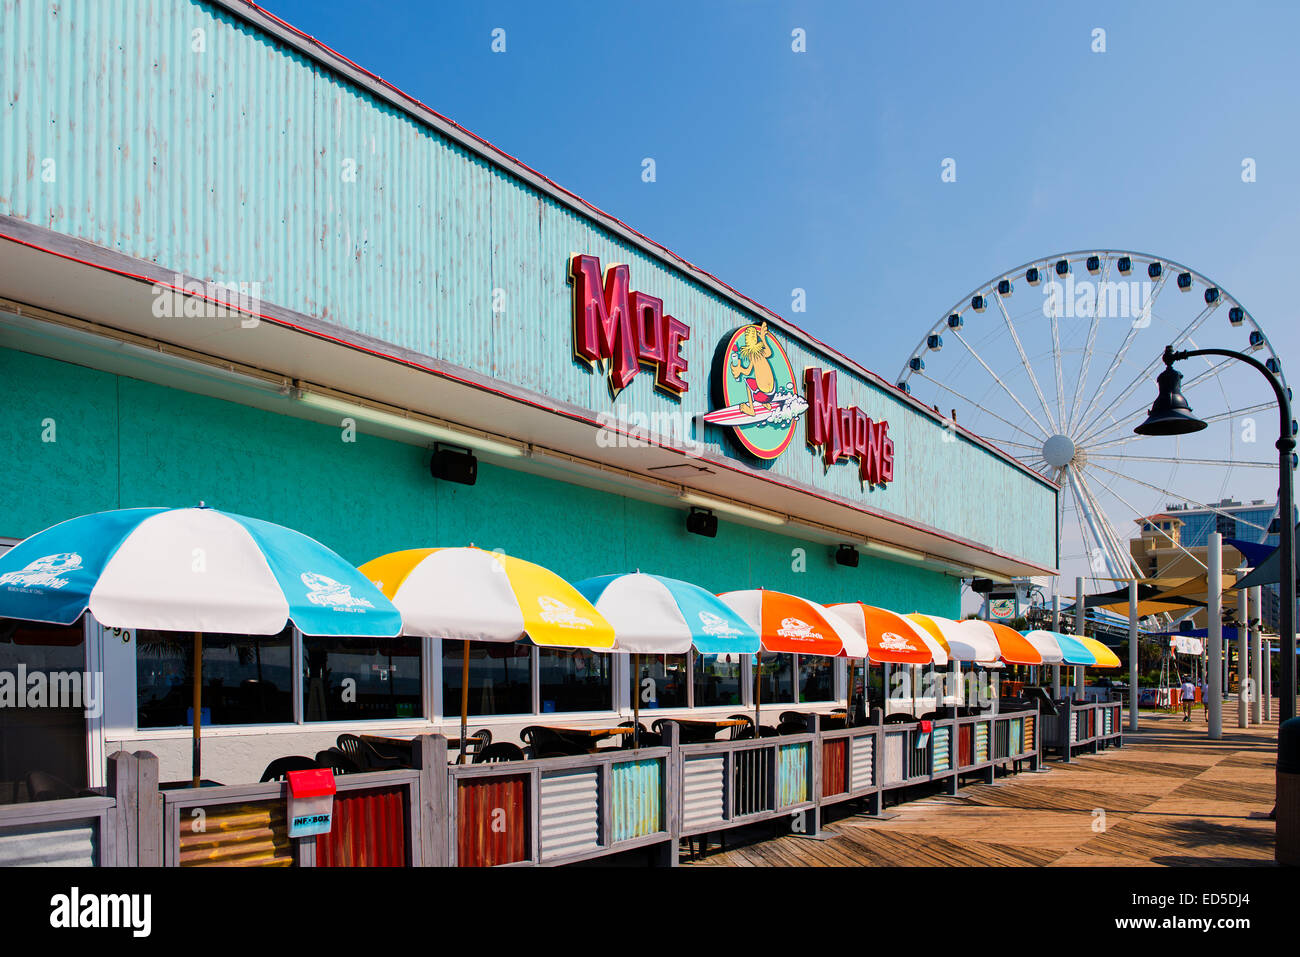 Moe Moons Restaurant and Bar in Myrtle Beach, South Carolina, USA Stock Photo